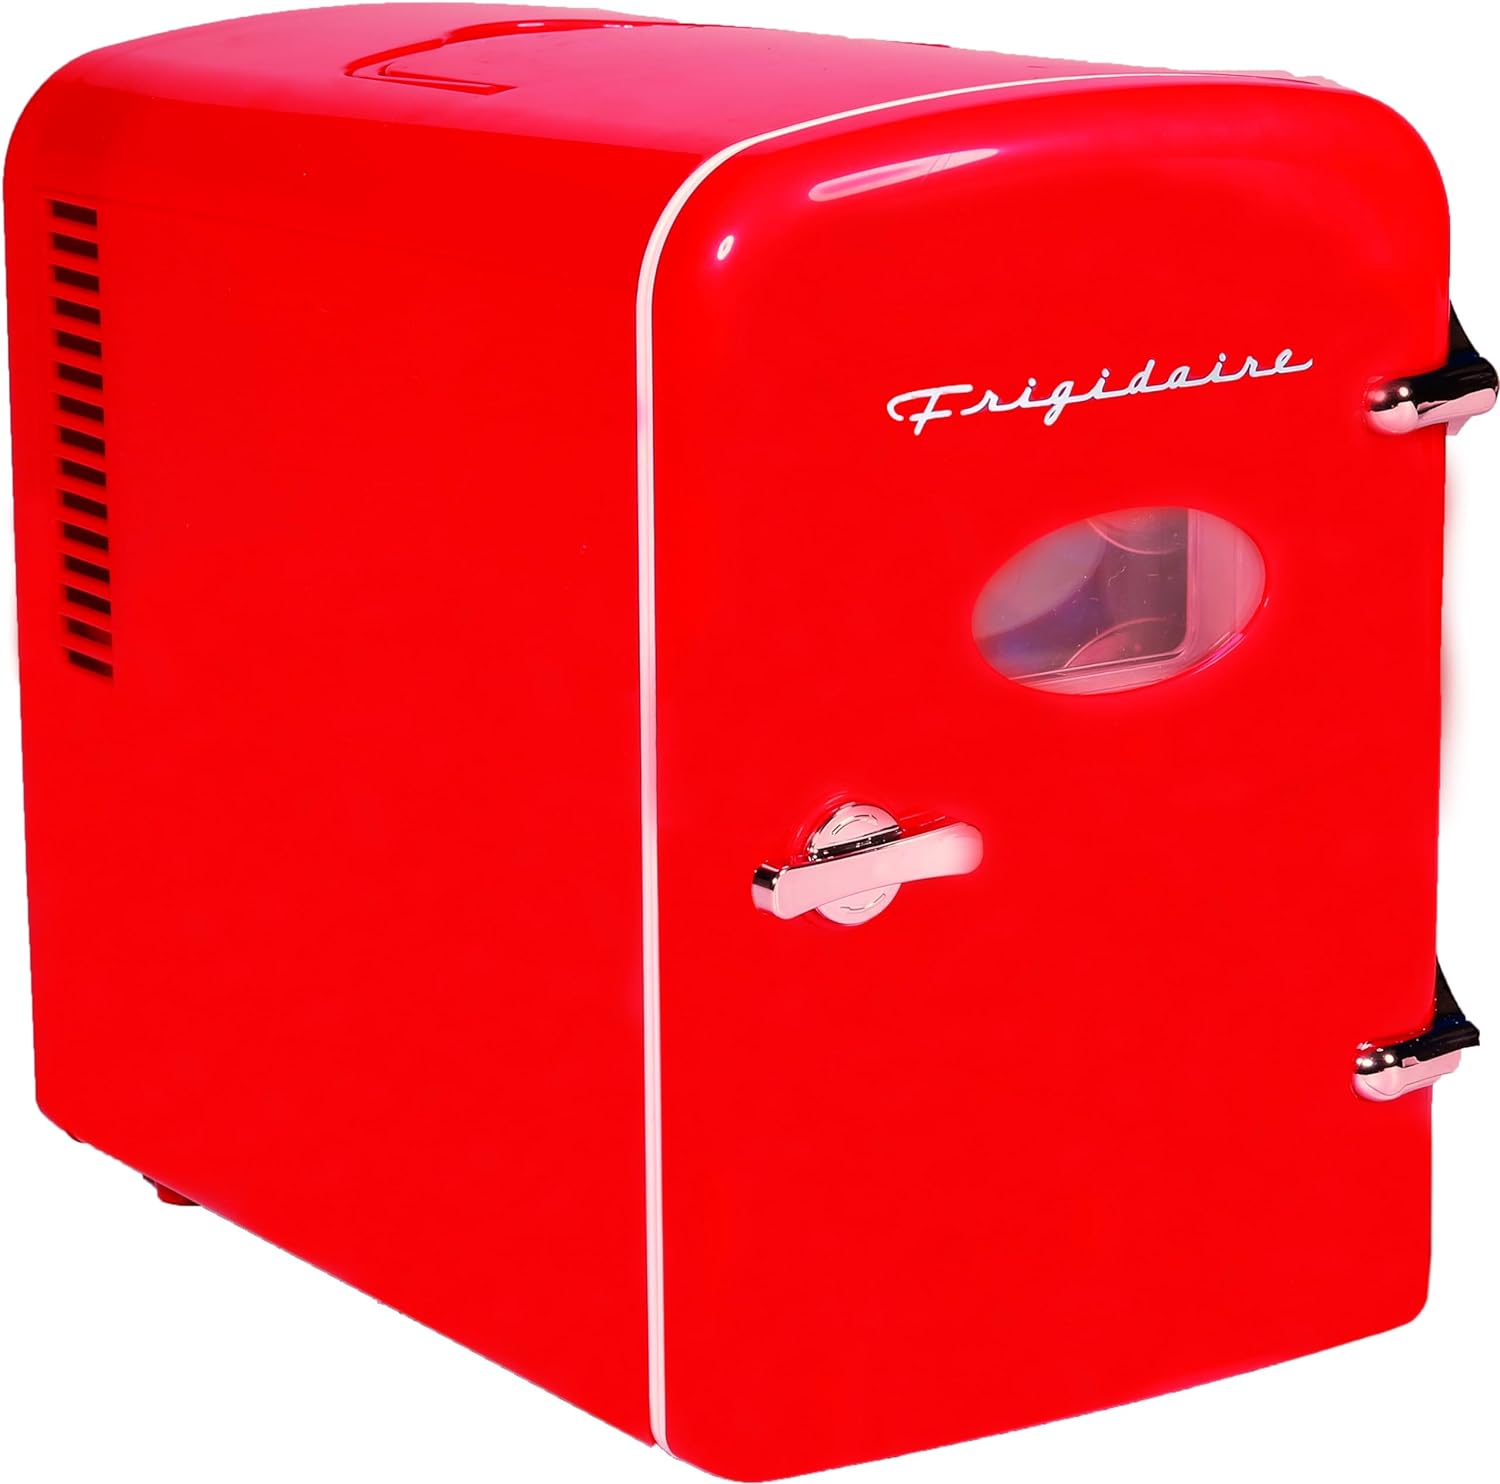 Frigidaire EFMIS129-RED Mini Portable Compact Personal Fridge Cooler